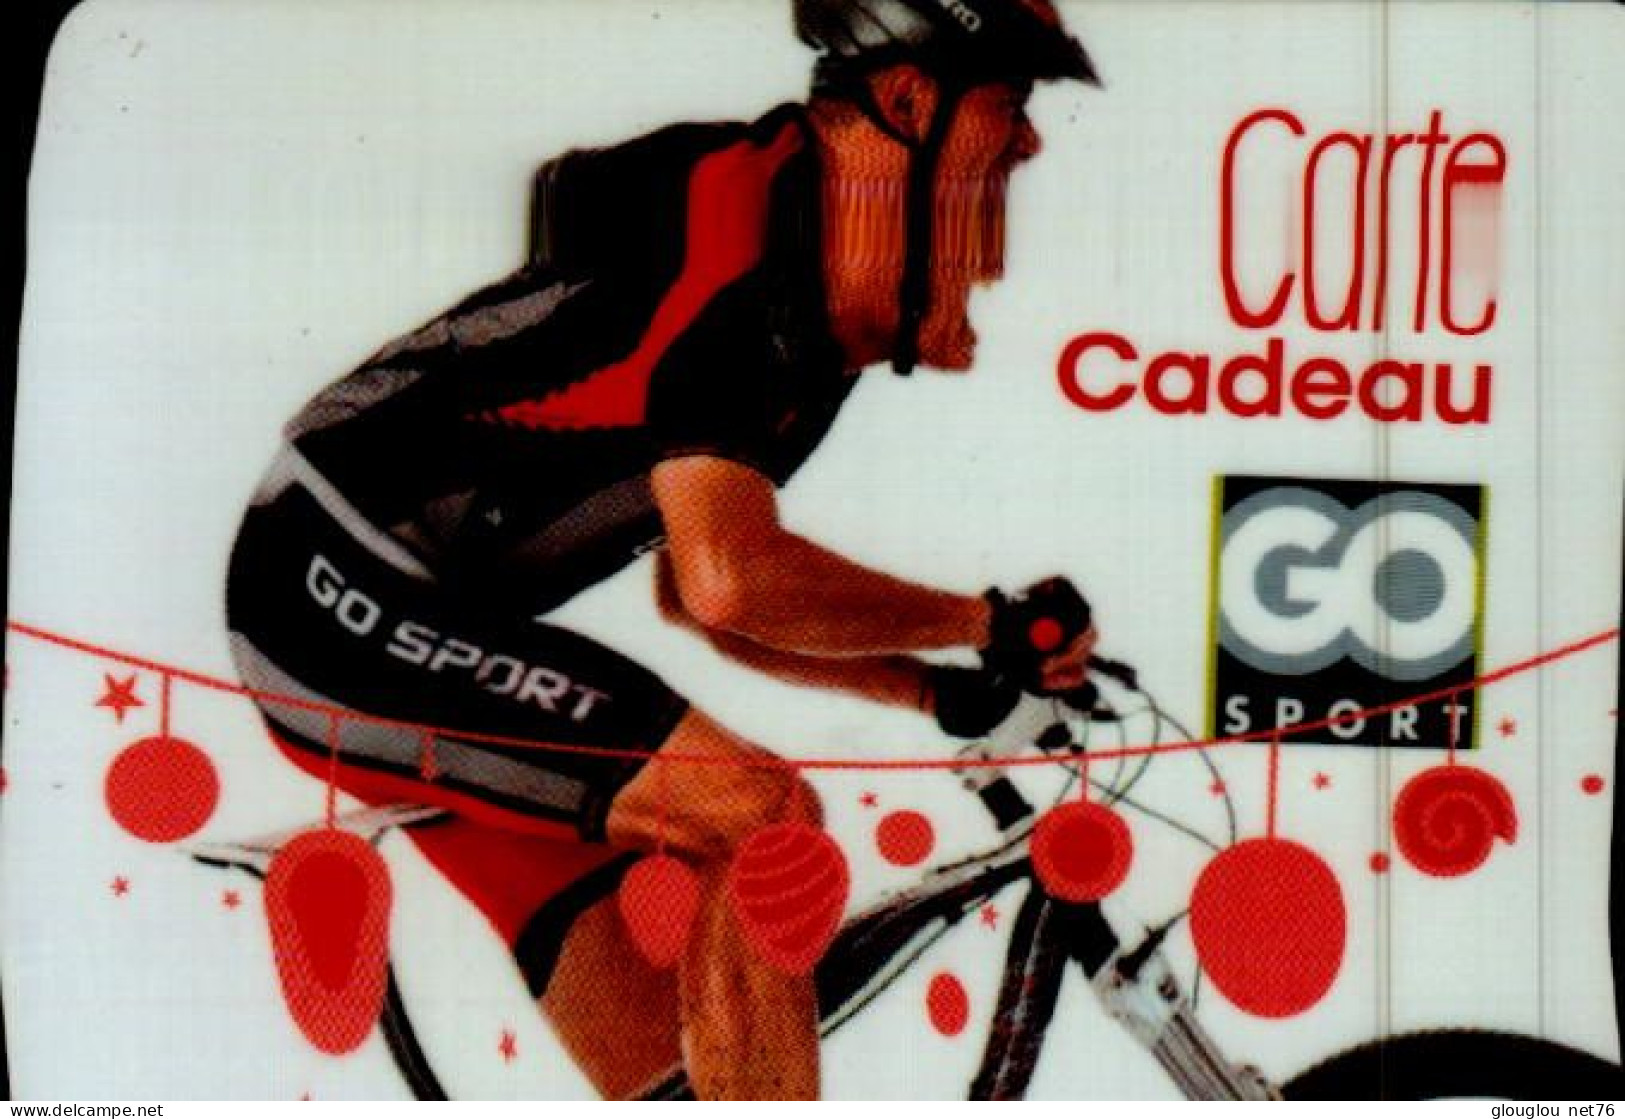 CARTE CADEAU...GO SPORT...CYCLISTE - Gift And Loyalty Cards